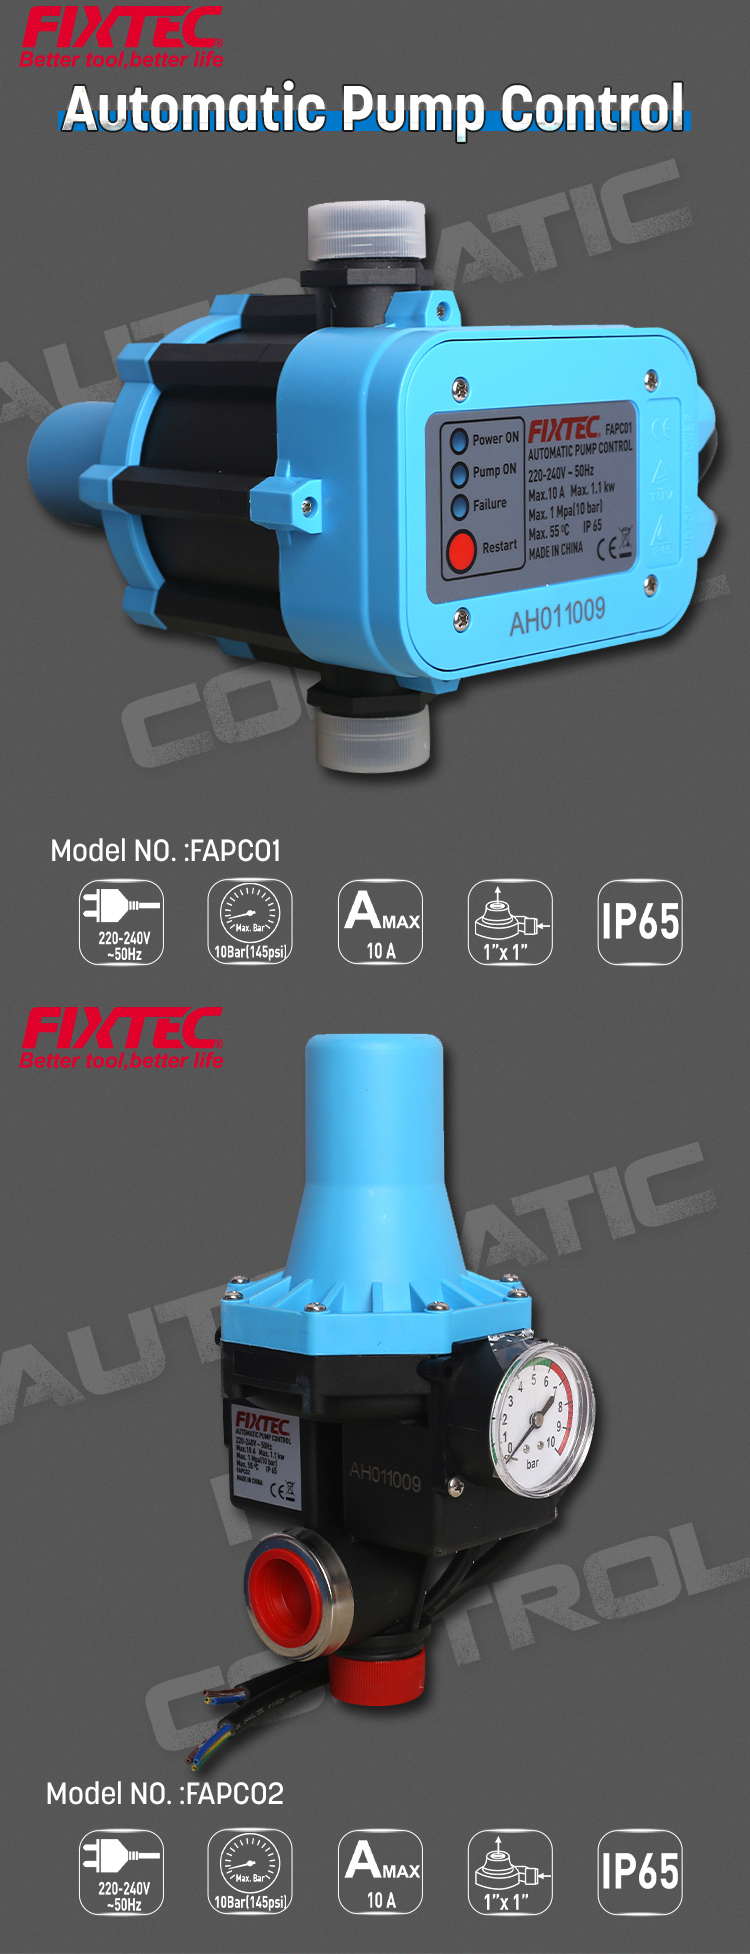 automatic pump control